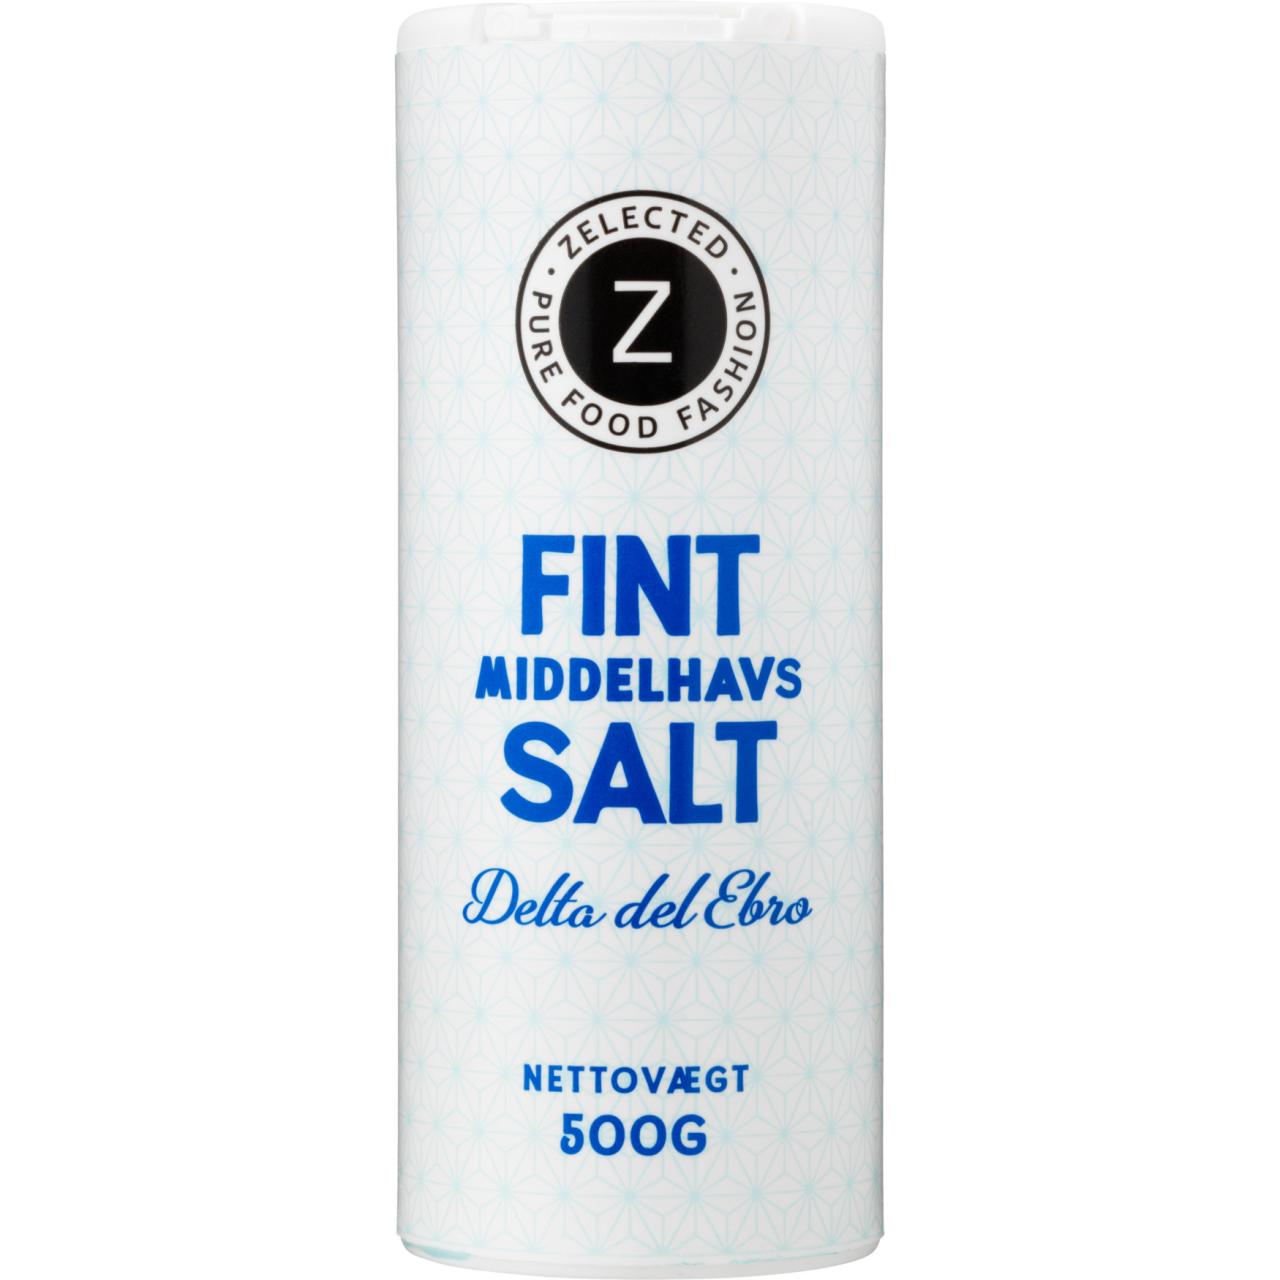 Z Fint Middelhavs Salt/Salz 500g